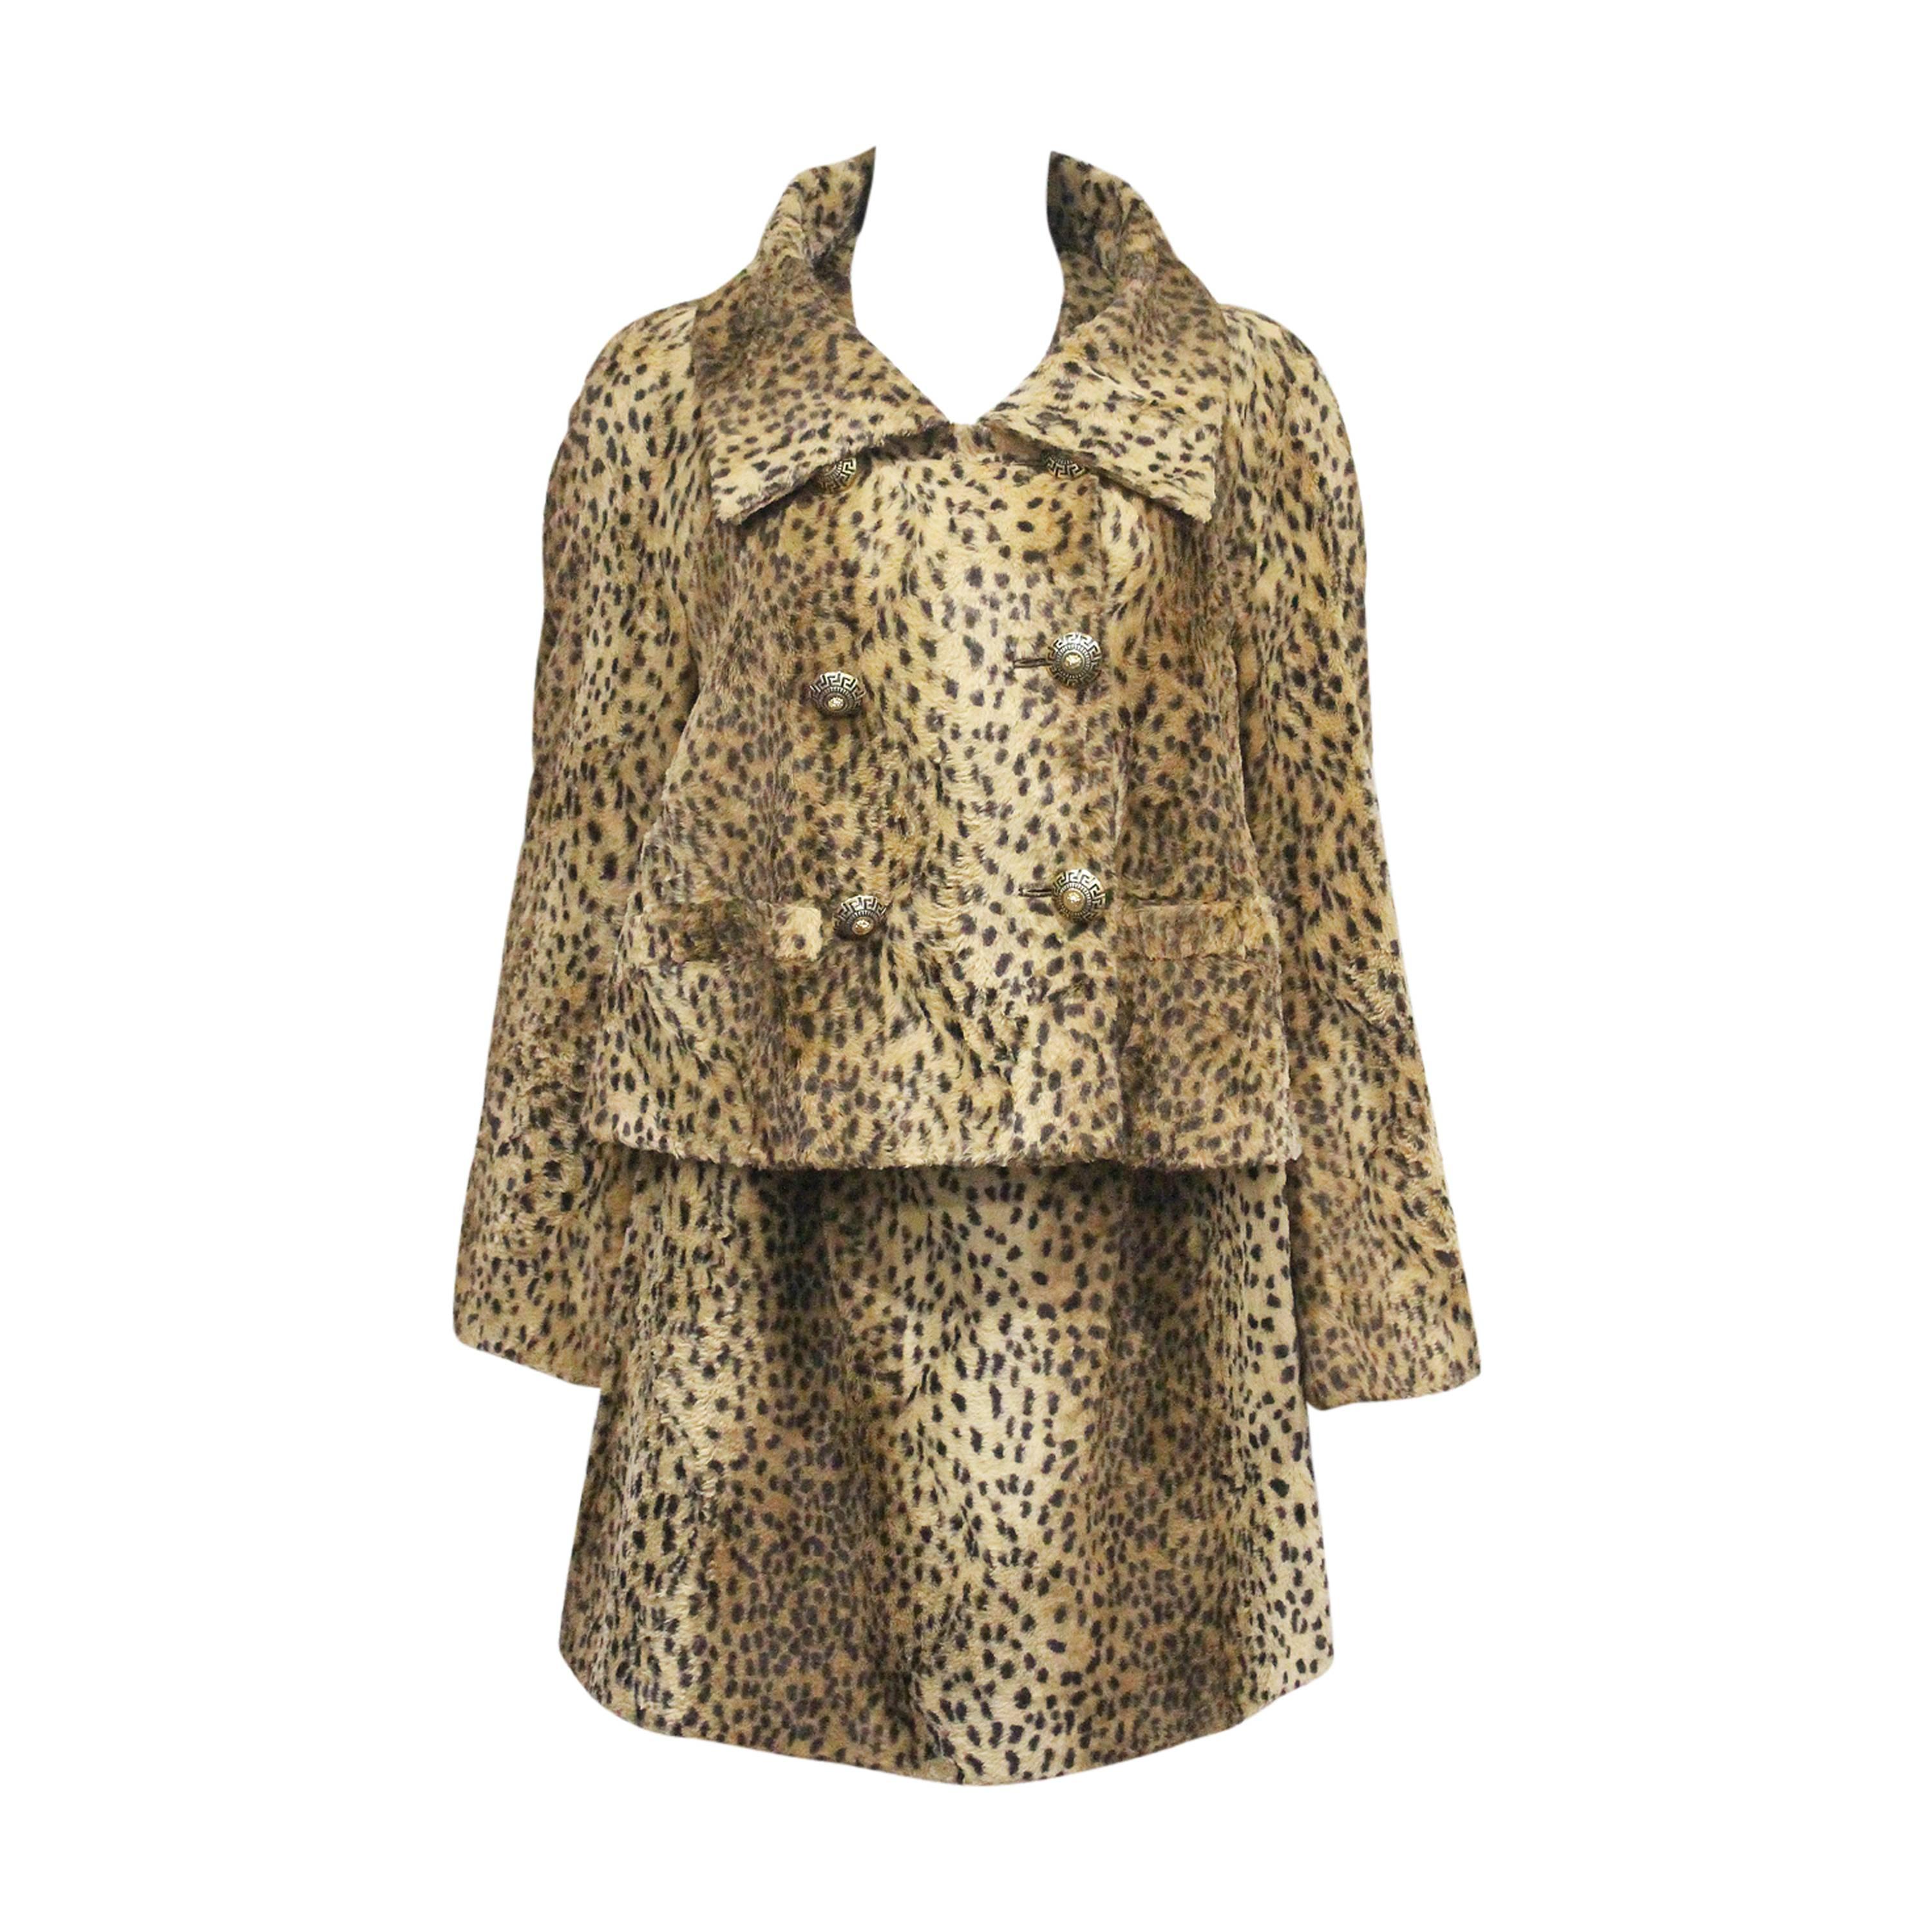 Gianni Versace cheetah print faux fur jacket and dress ensemble, c. 1990s  For Sale